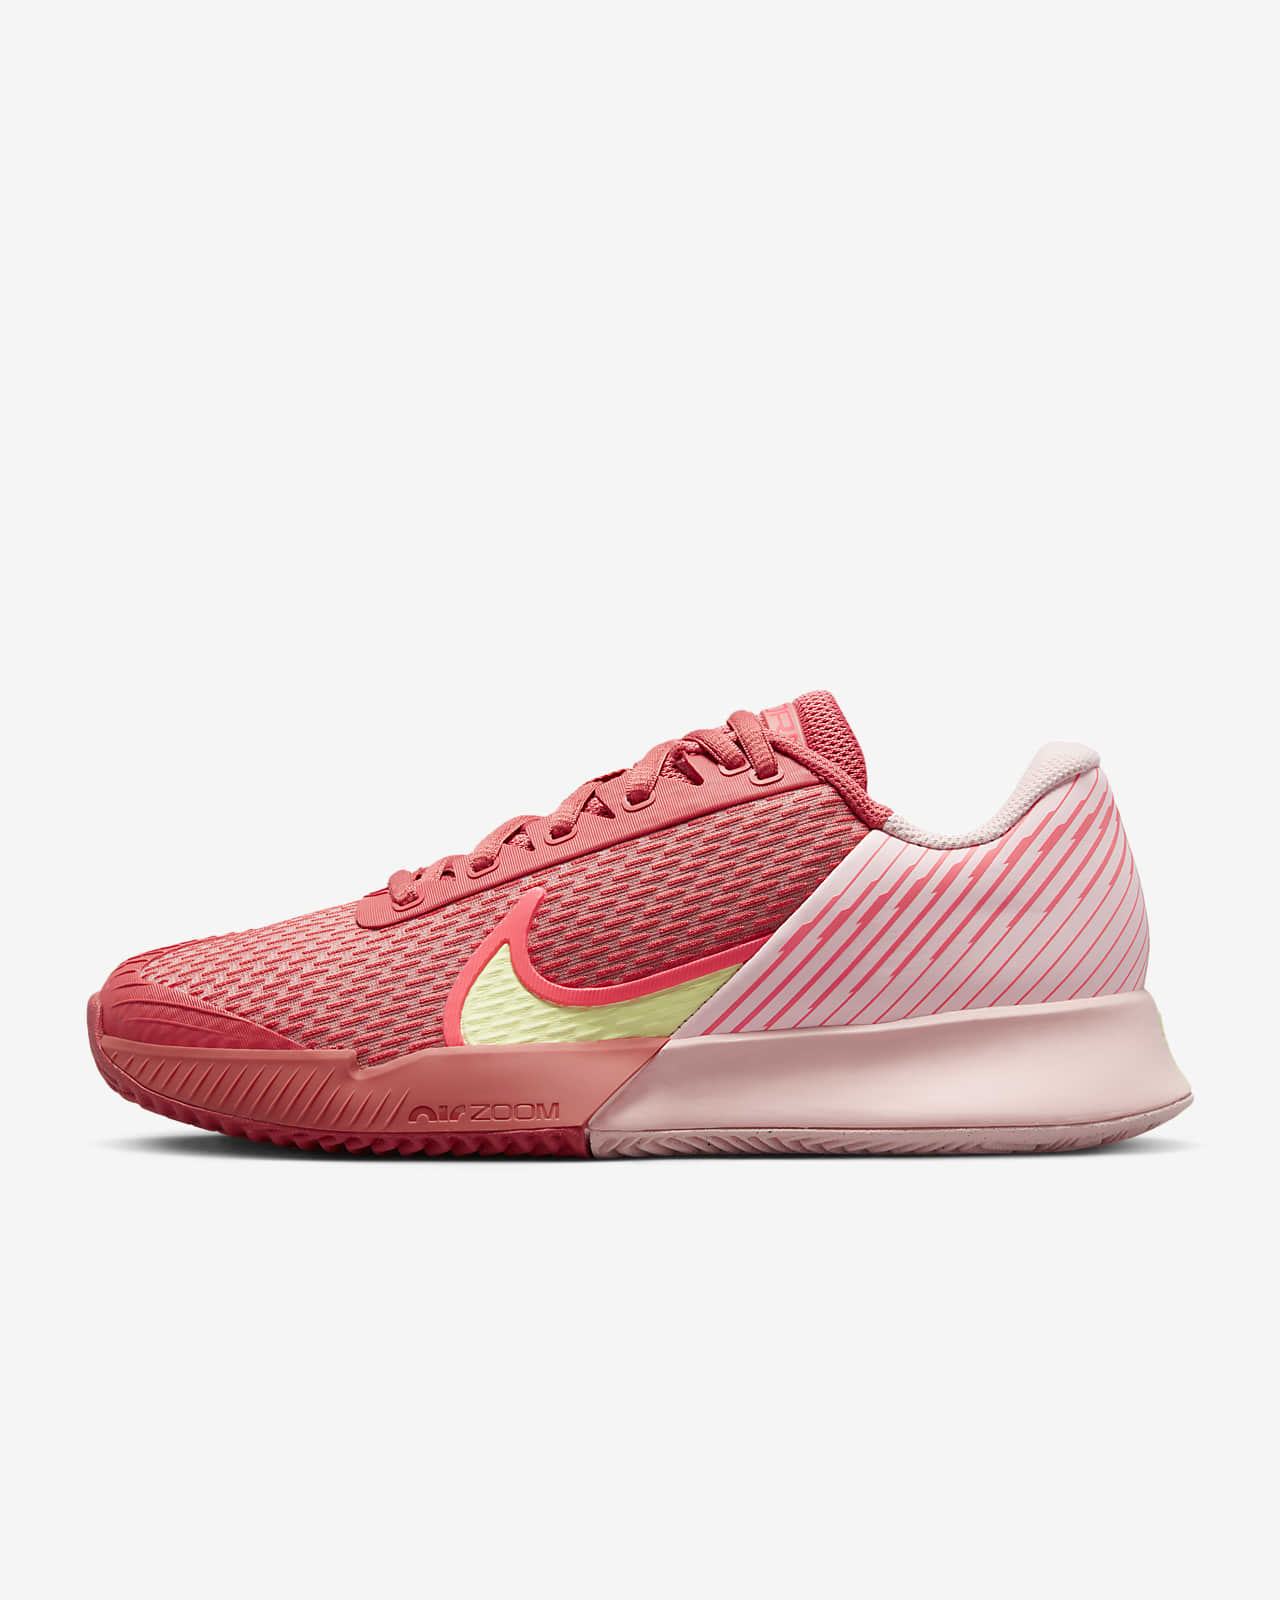 NikeCourt Air Zoom Vapor Pro 2 Women's Clay Tennis Shoes